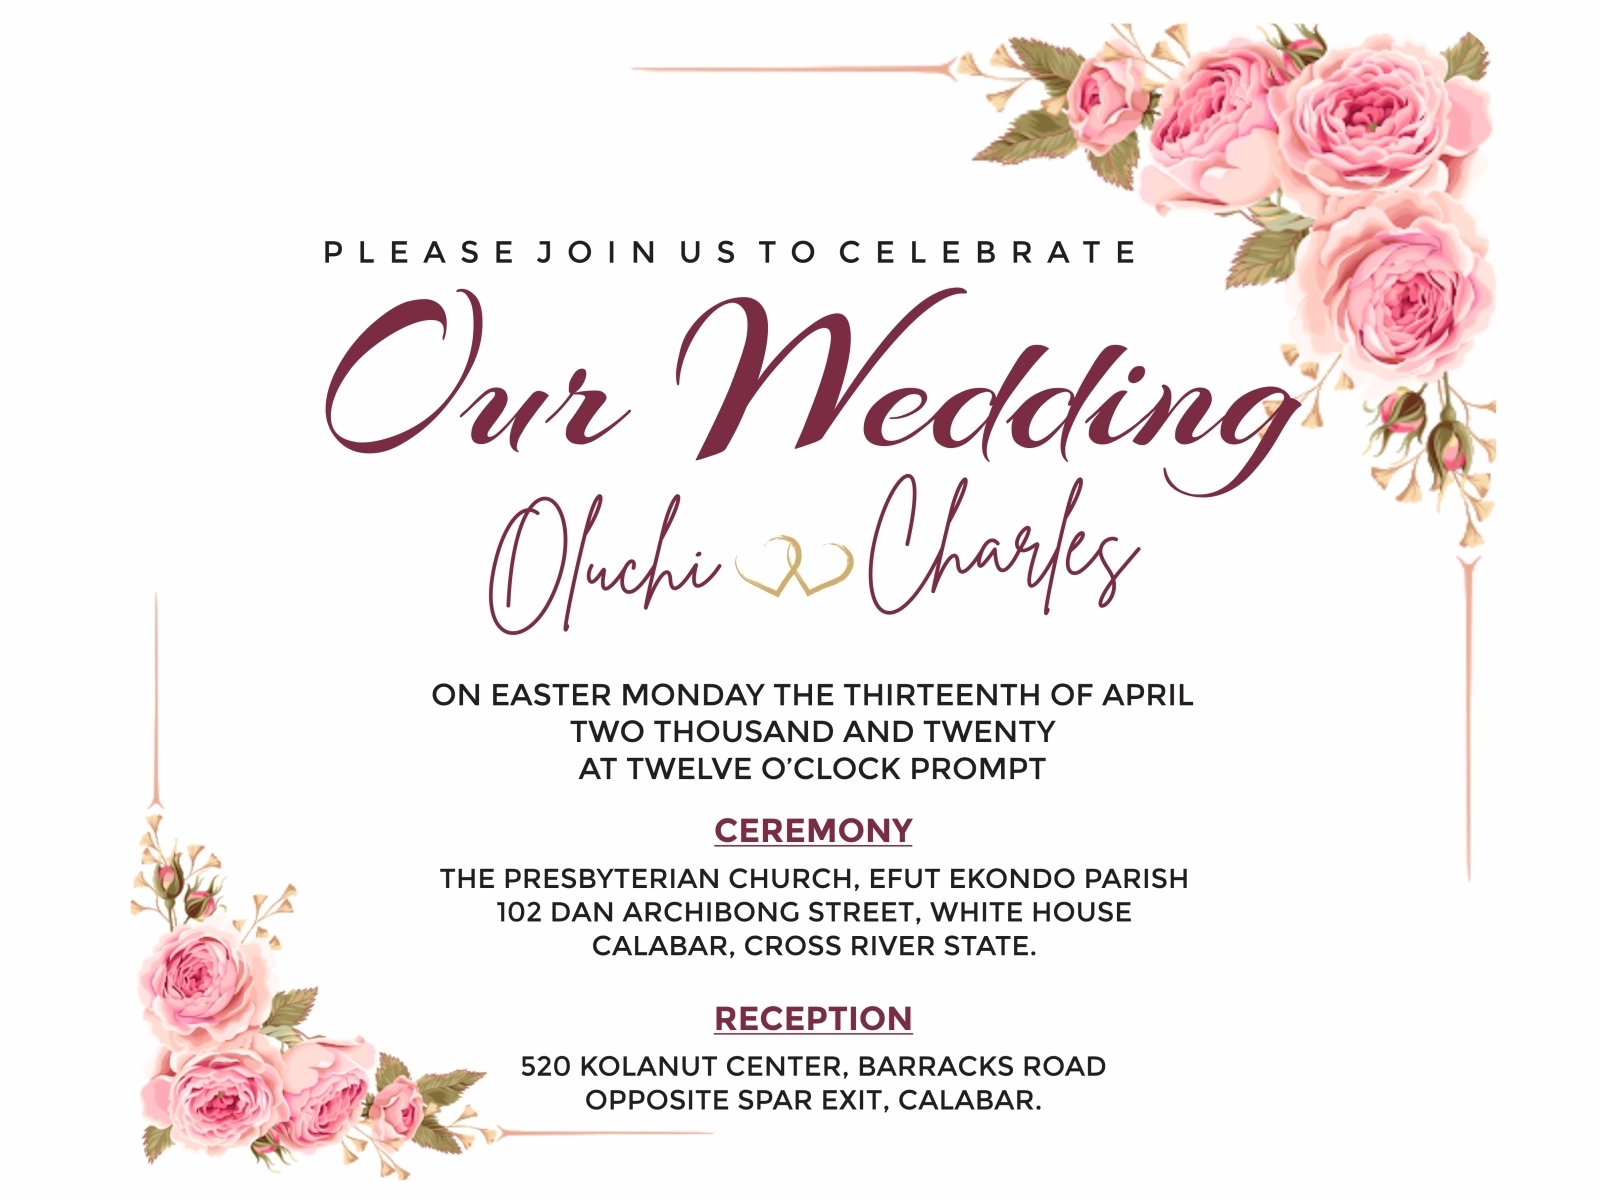 Wedding Invitation Design by Samuel .B. Adebayo on Dribbble